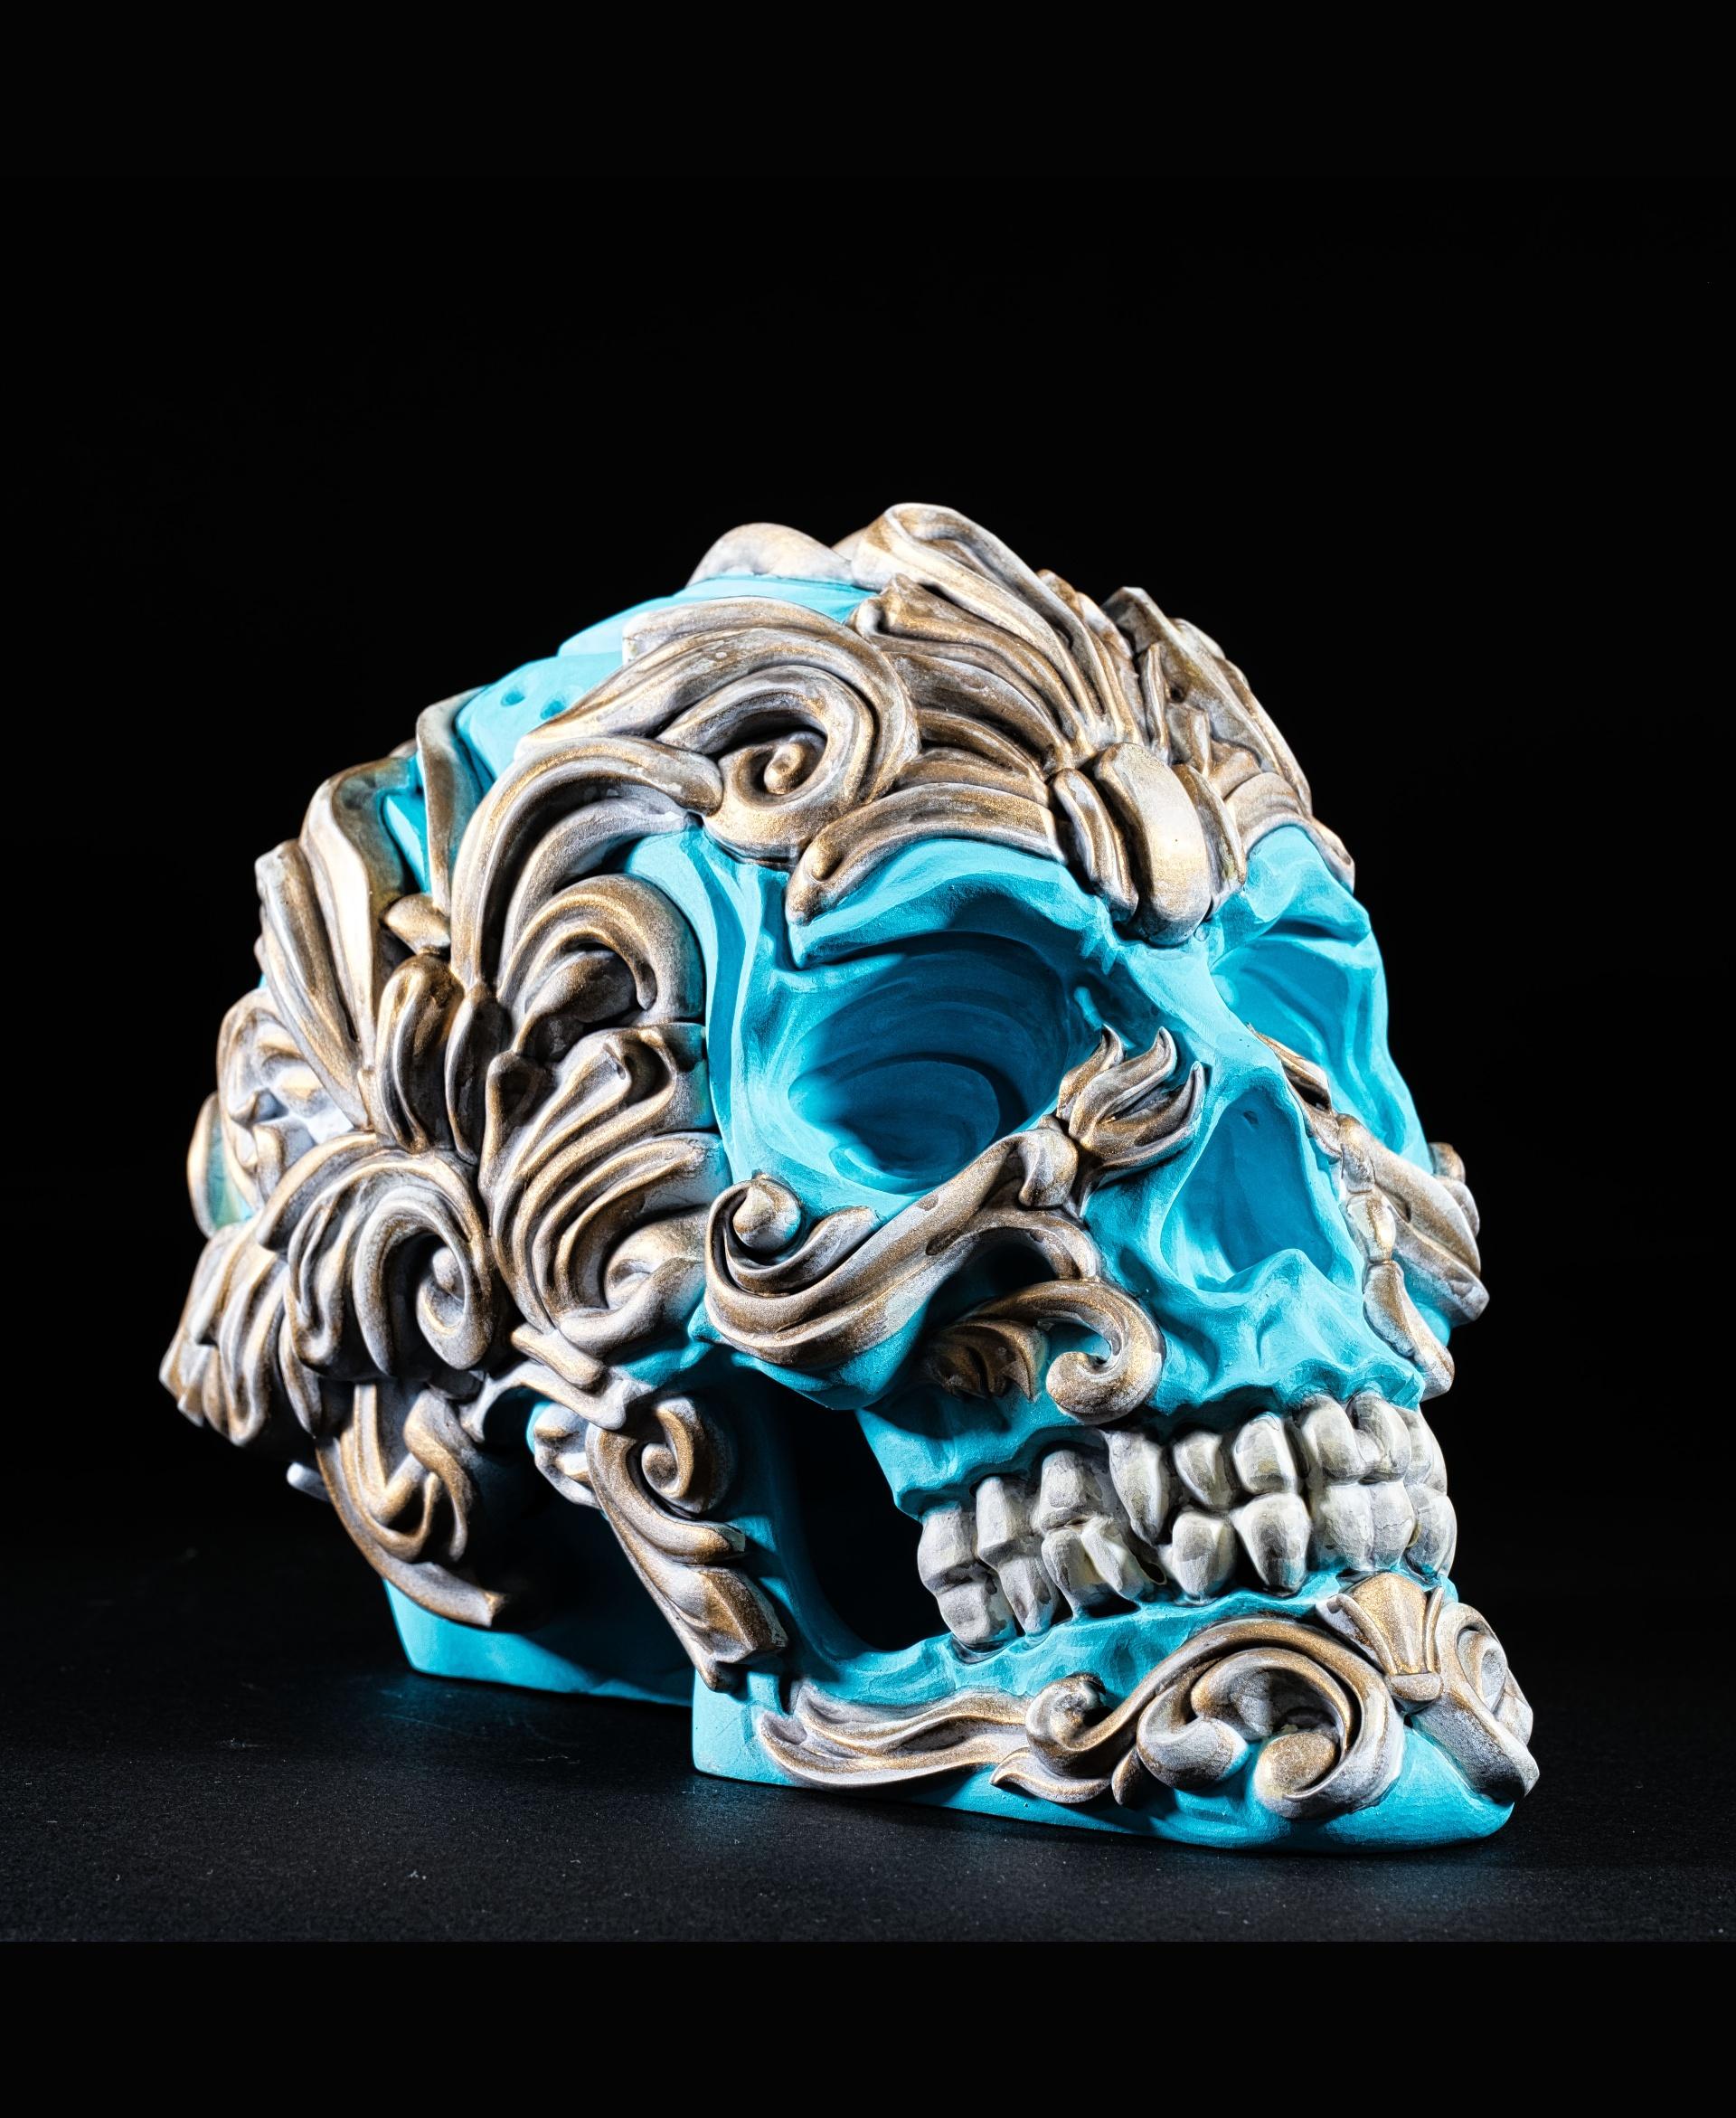 Ornate Skull  - Printer: Elegoo Saturn 2
Resin: Siraya Tech Navy Grey
Paint: Monument Hobbies Pro Acryl - 3d model